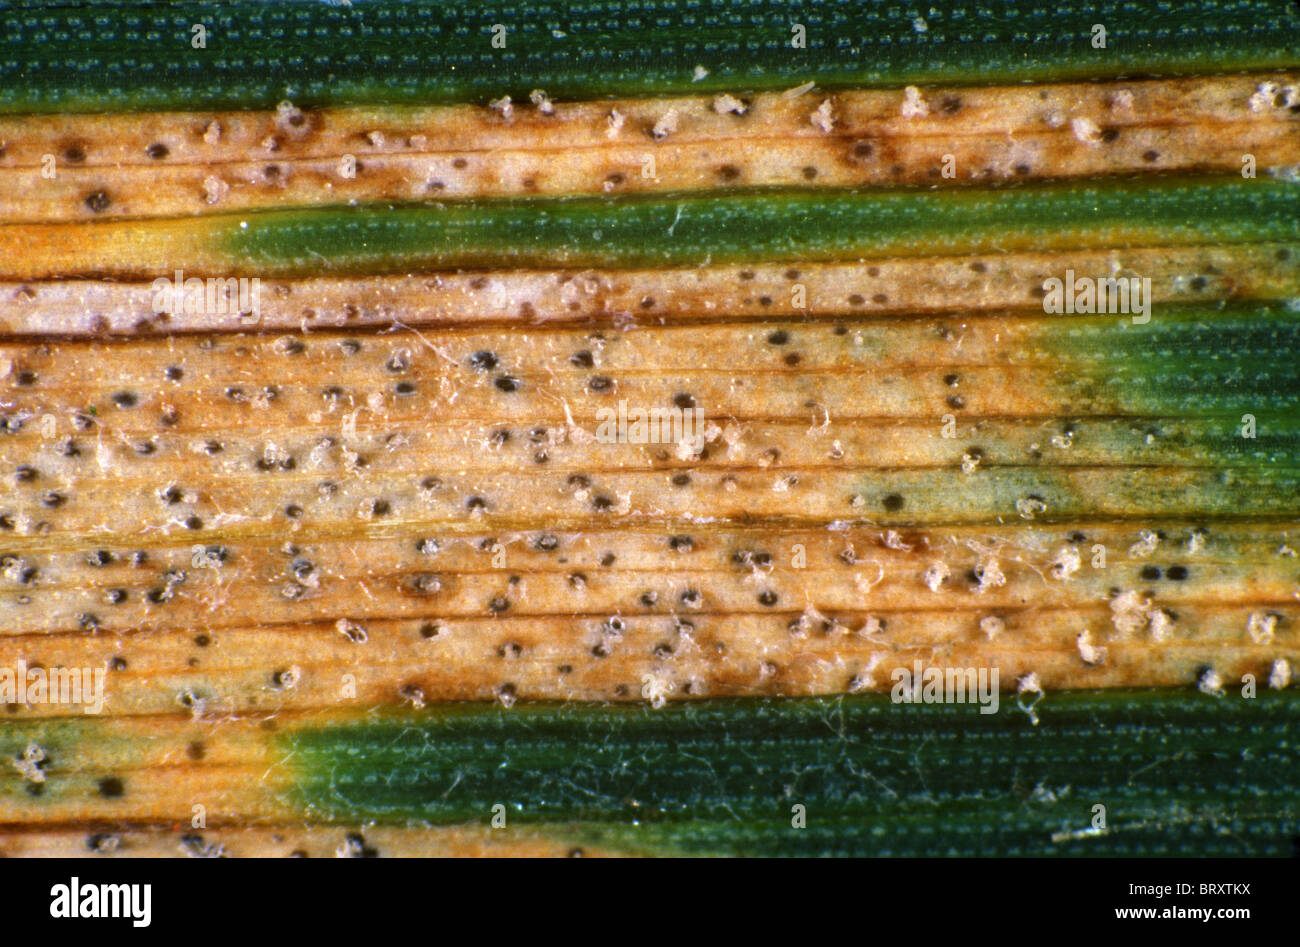 Septoria leaf spot (Septoria tritici) lesions, pycnidia, & spores on a wheat leaf Stock Photo